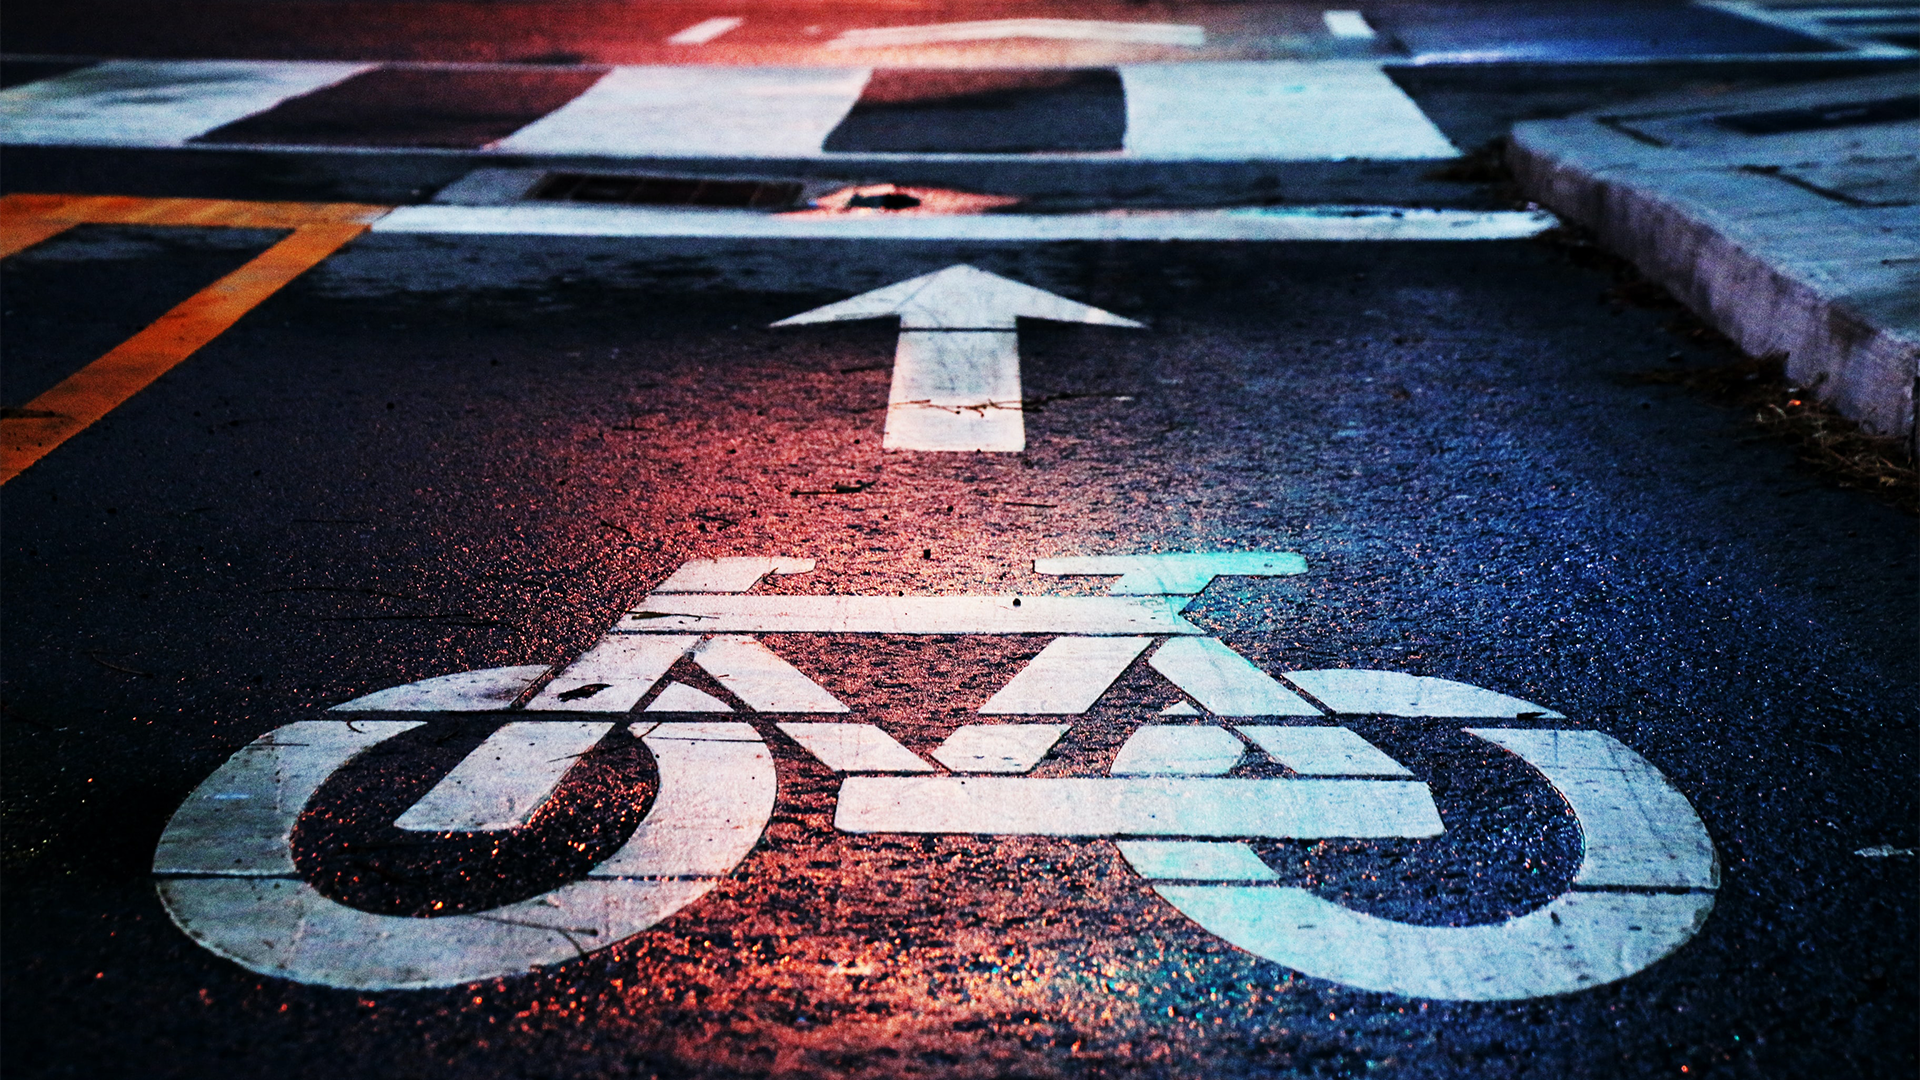 Bike markings indicating bike lane on road